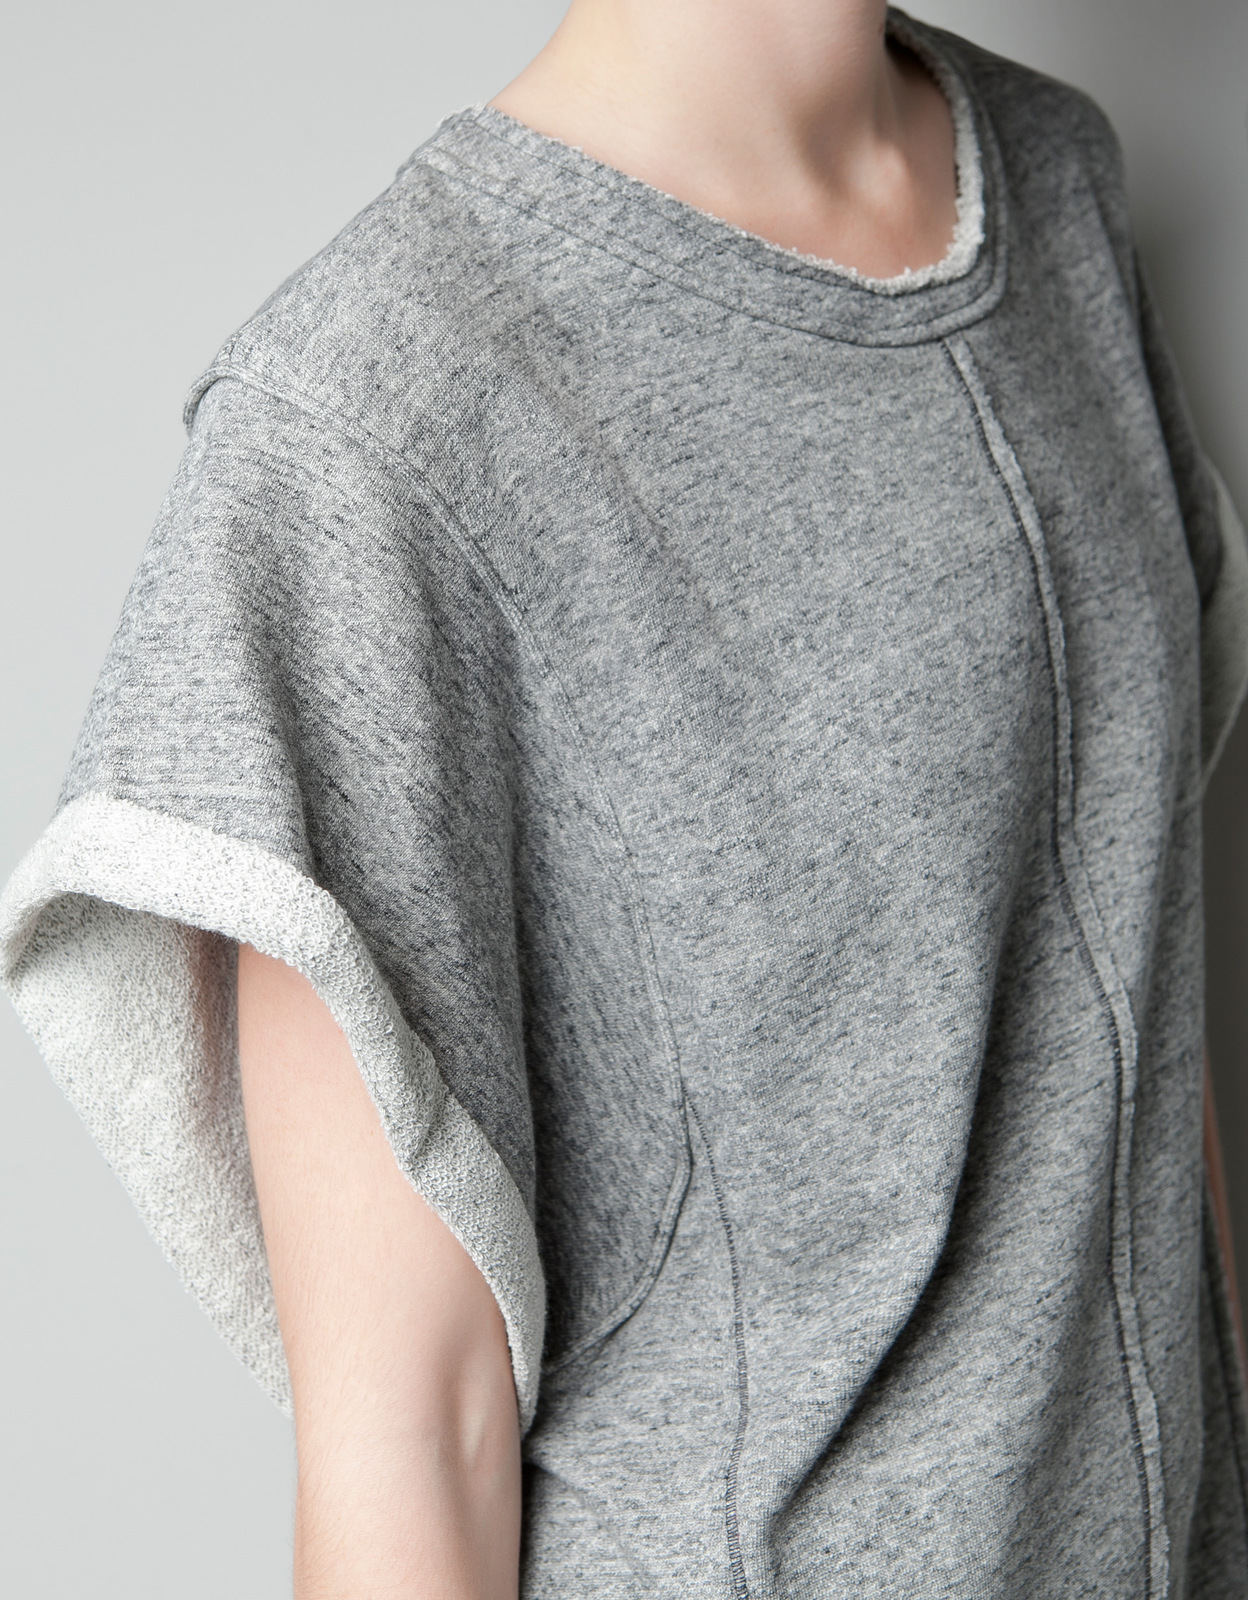 Zara szürke pulóver ruha 2012.10.21 fotója